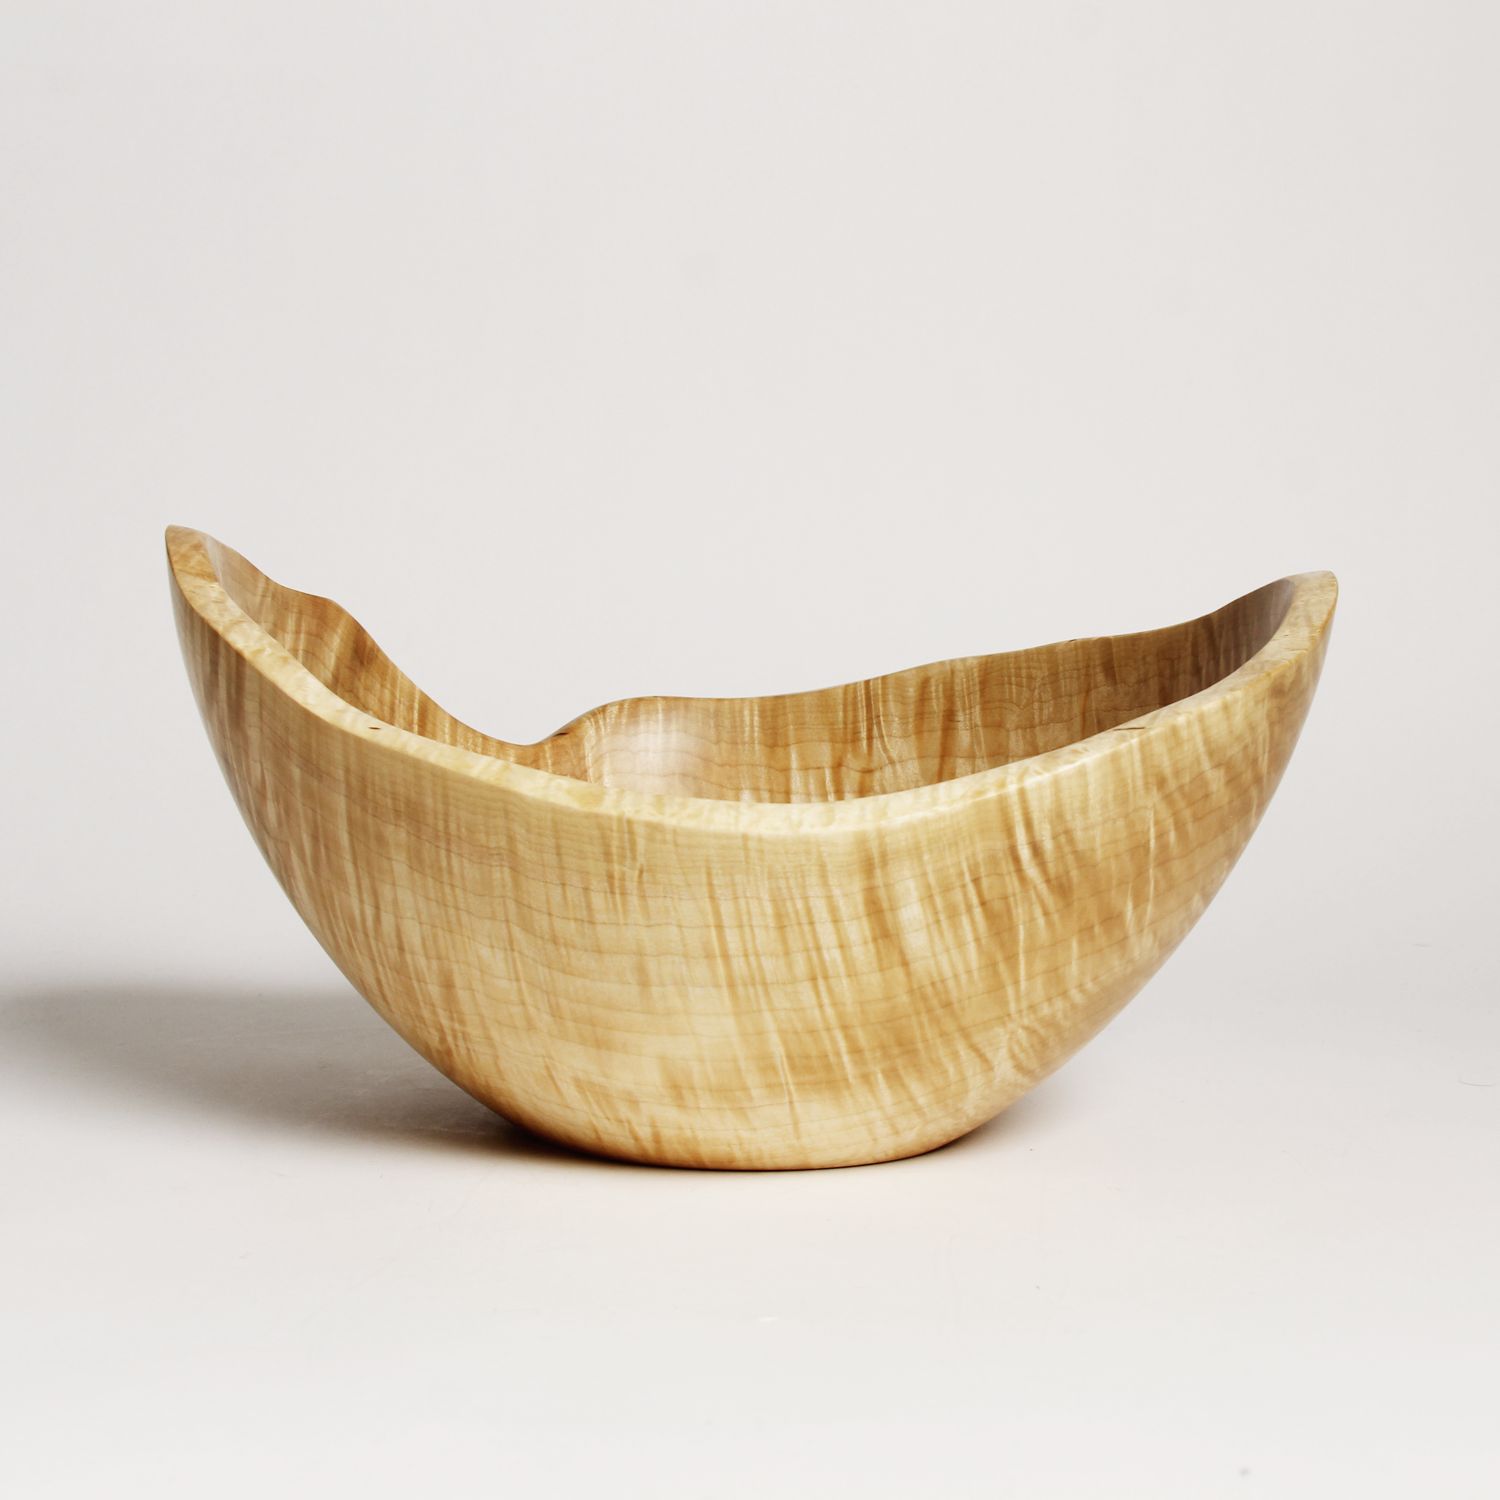 Michael Sbrocca: Bowl Maple Product Image 1 of 2